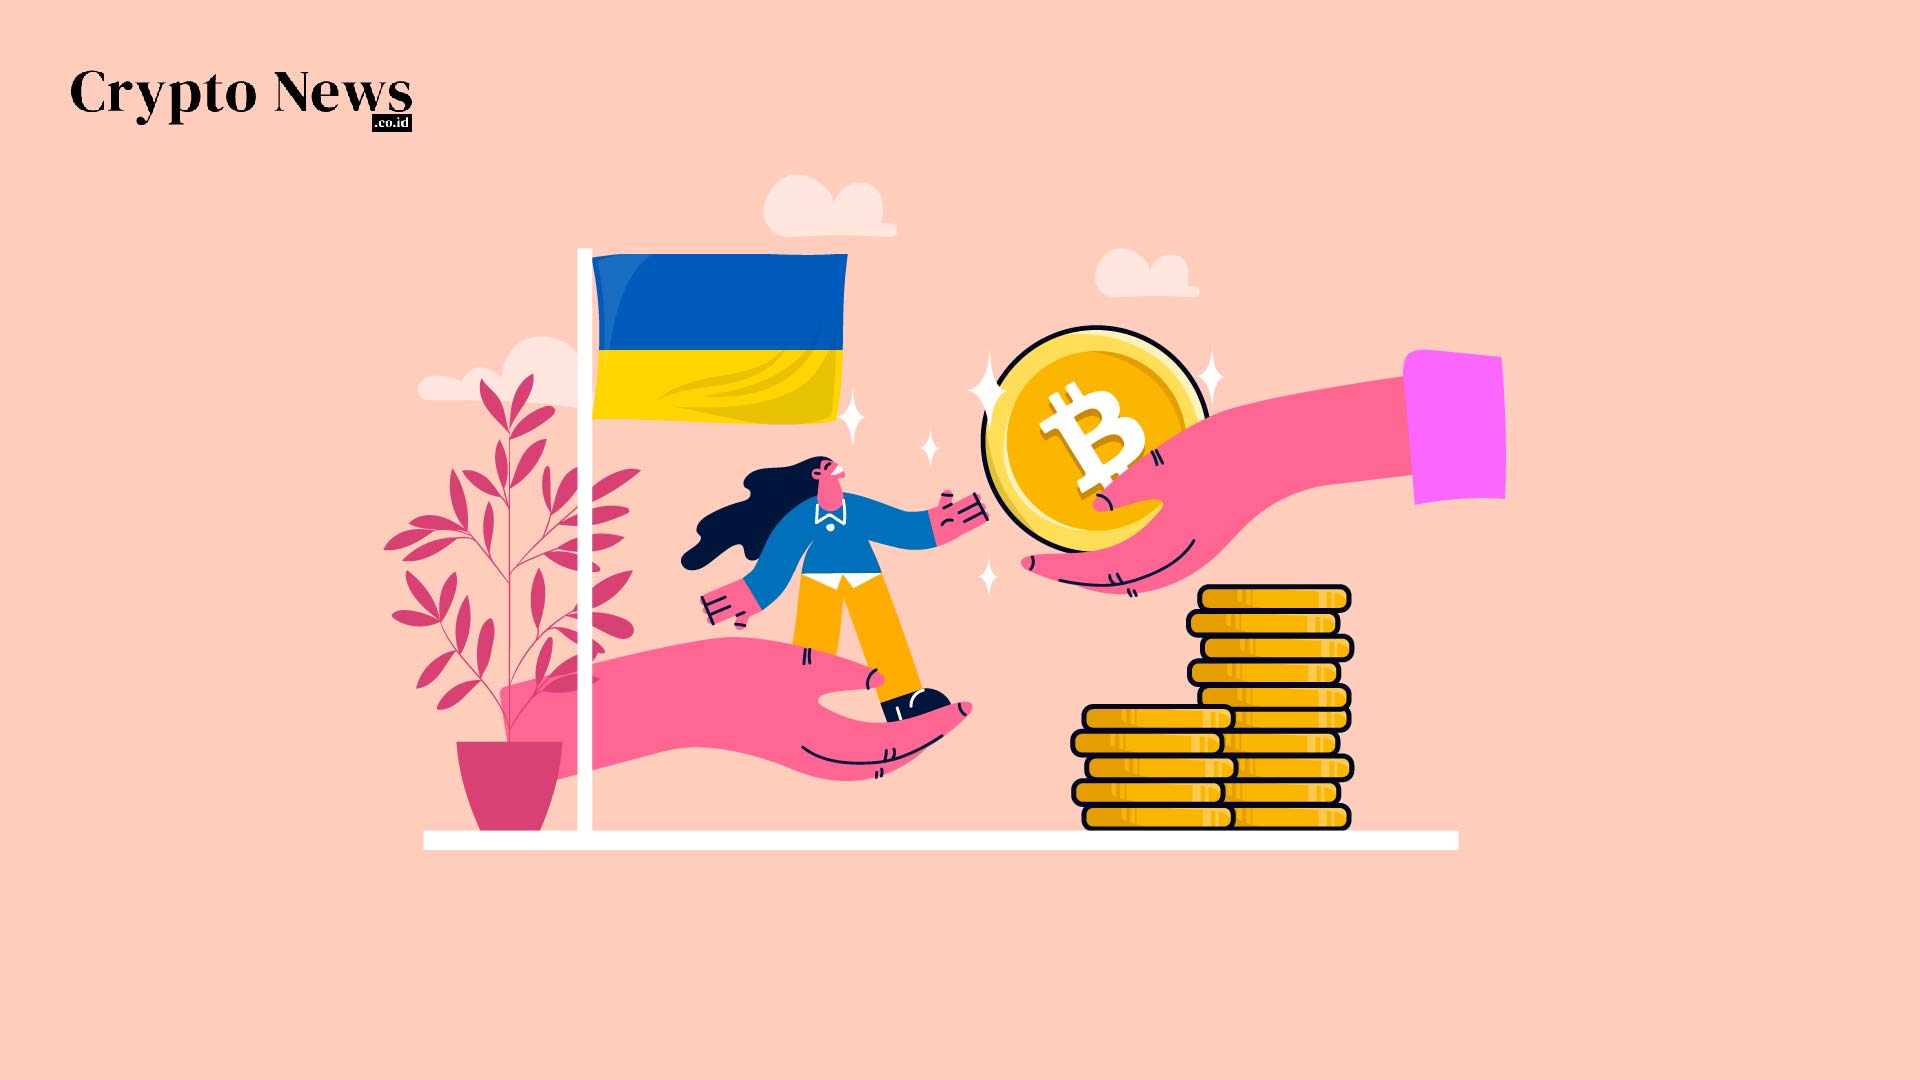 Illust : Ukraina Menerima Donasi Hampir $70 Juta dalam Crypto